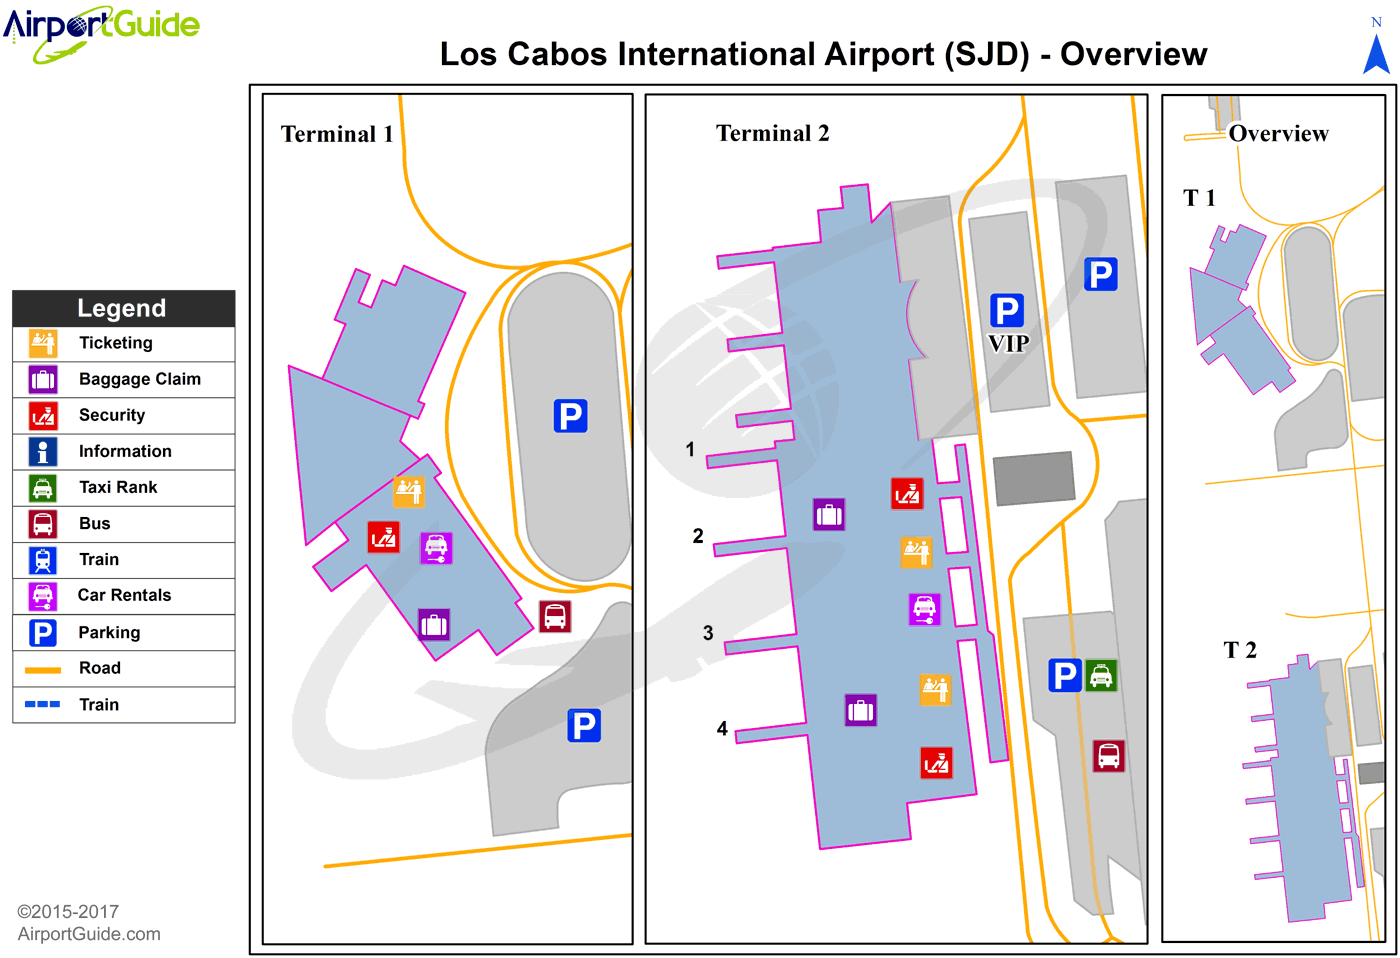 San José del Cabo - Los Cabos International (SJD) Airport Terminal Map - Overview